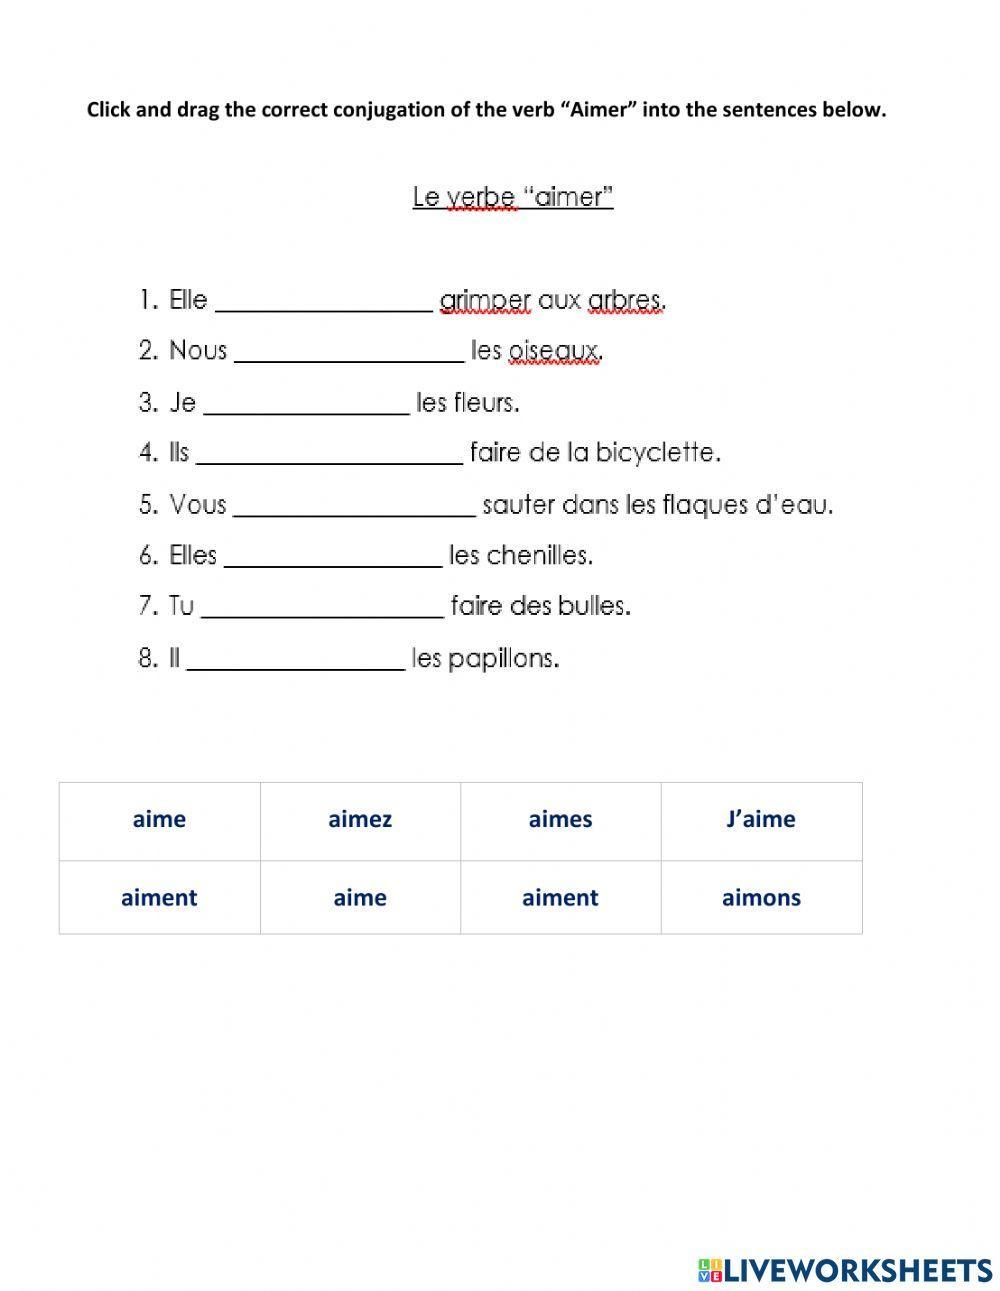 Le verbe aimer interactive worksheet